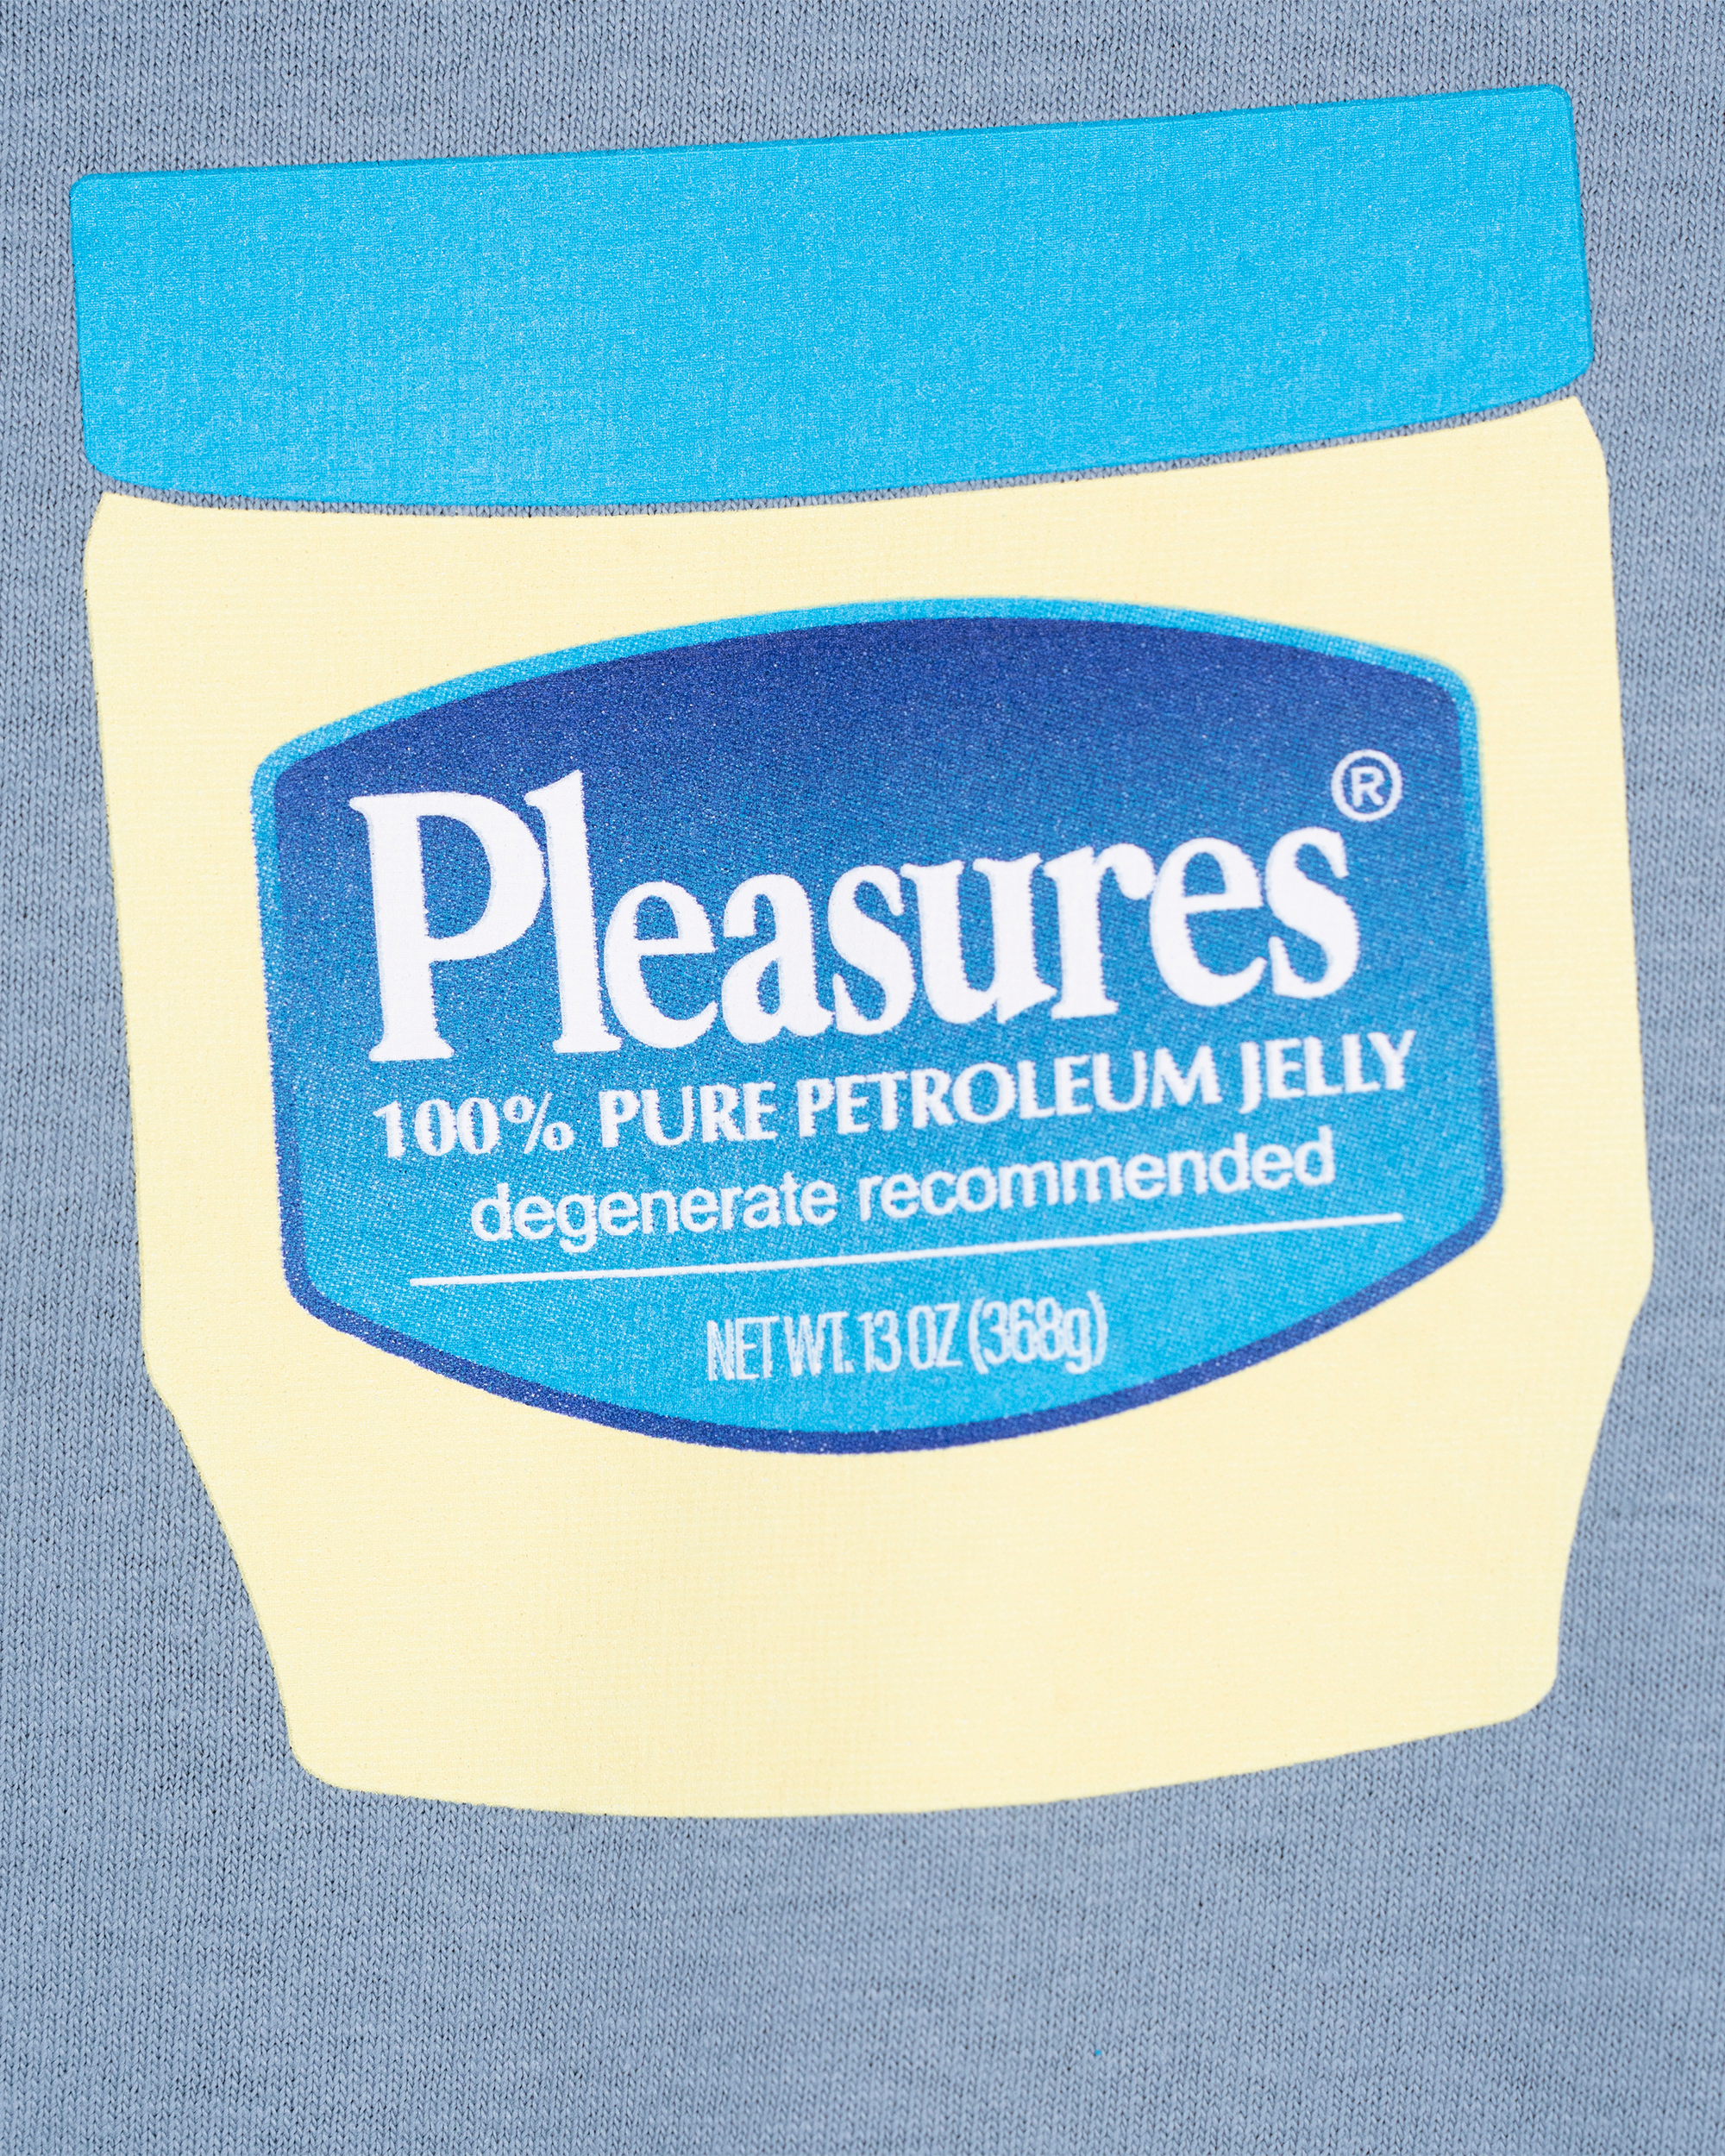 Jelly T-Shirt - Blue